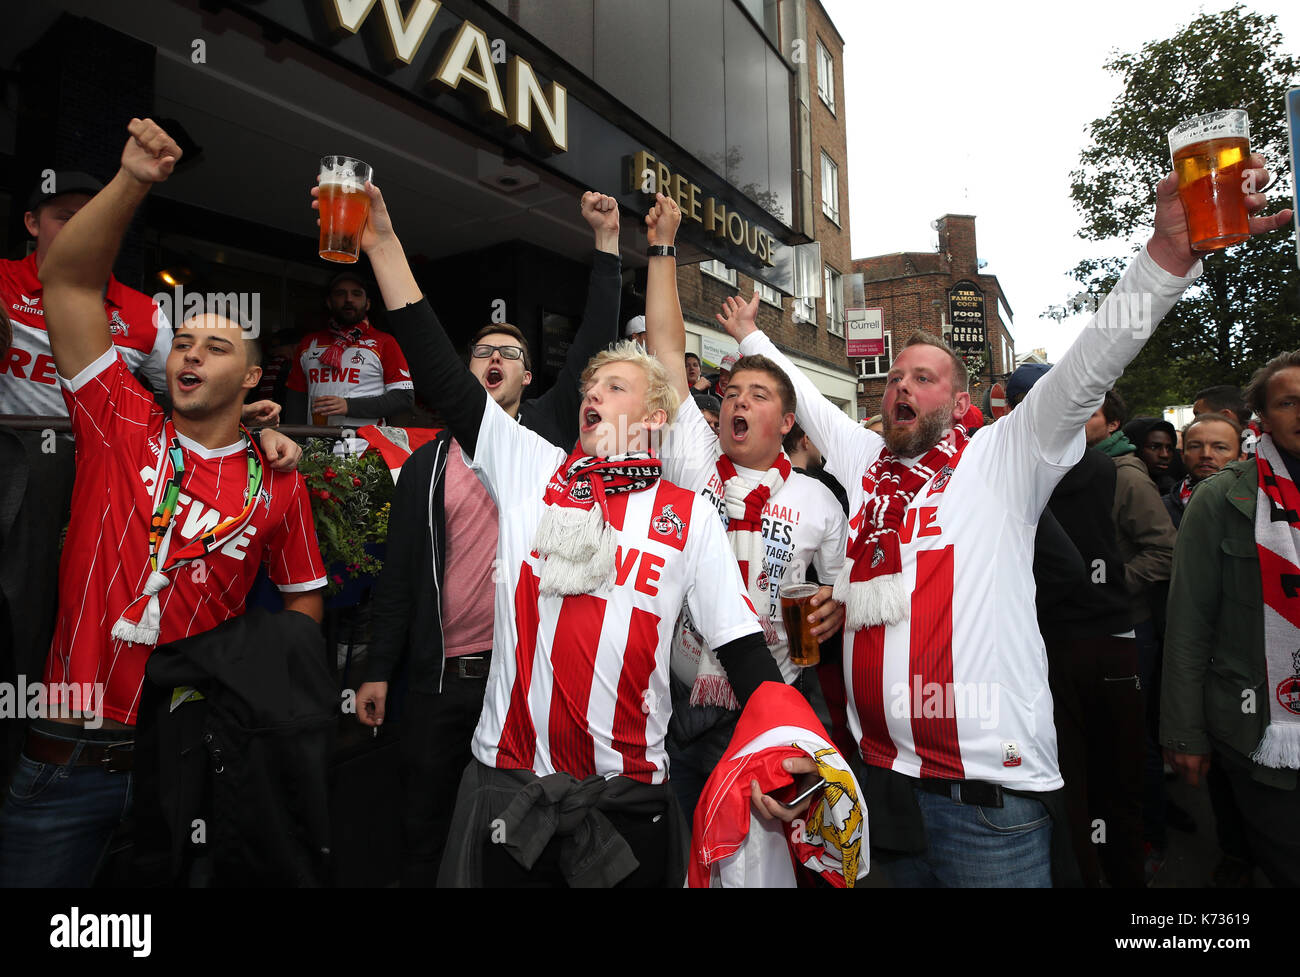 FC Koln fans outside The White Swan pub prior to the Europa League match at the Emirates Stadium, London. Stock Photo